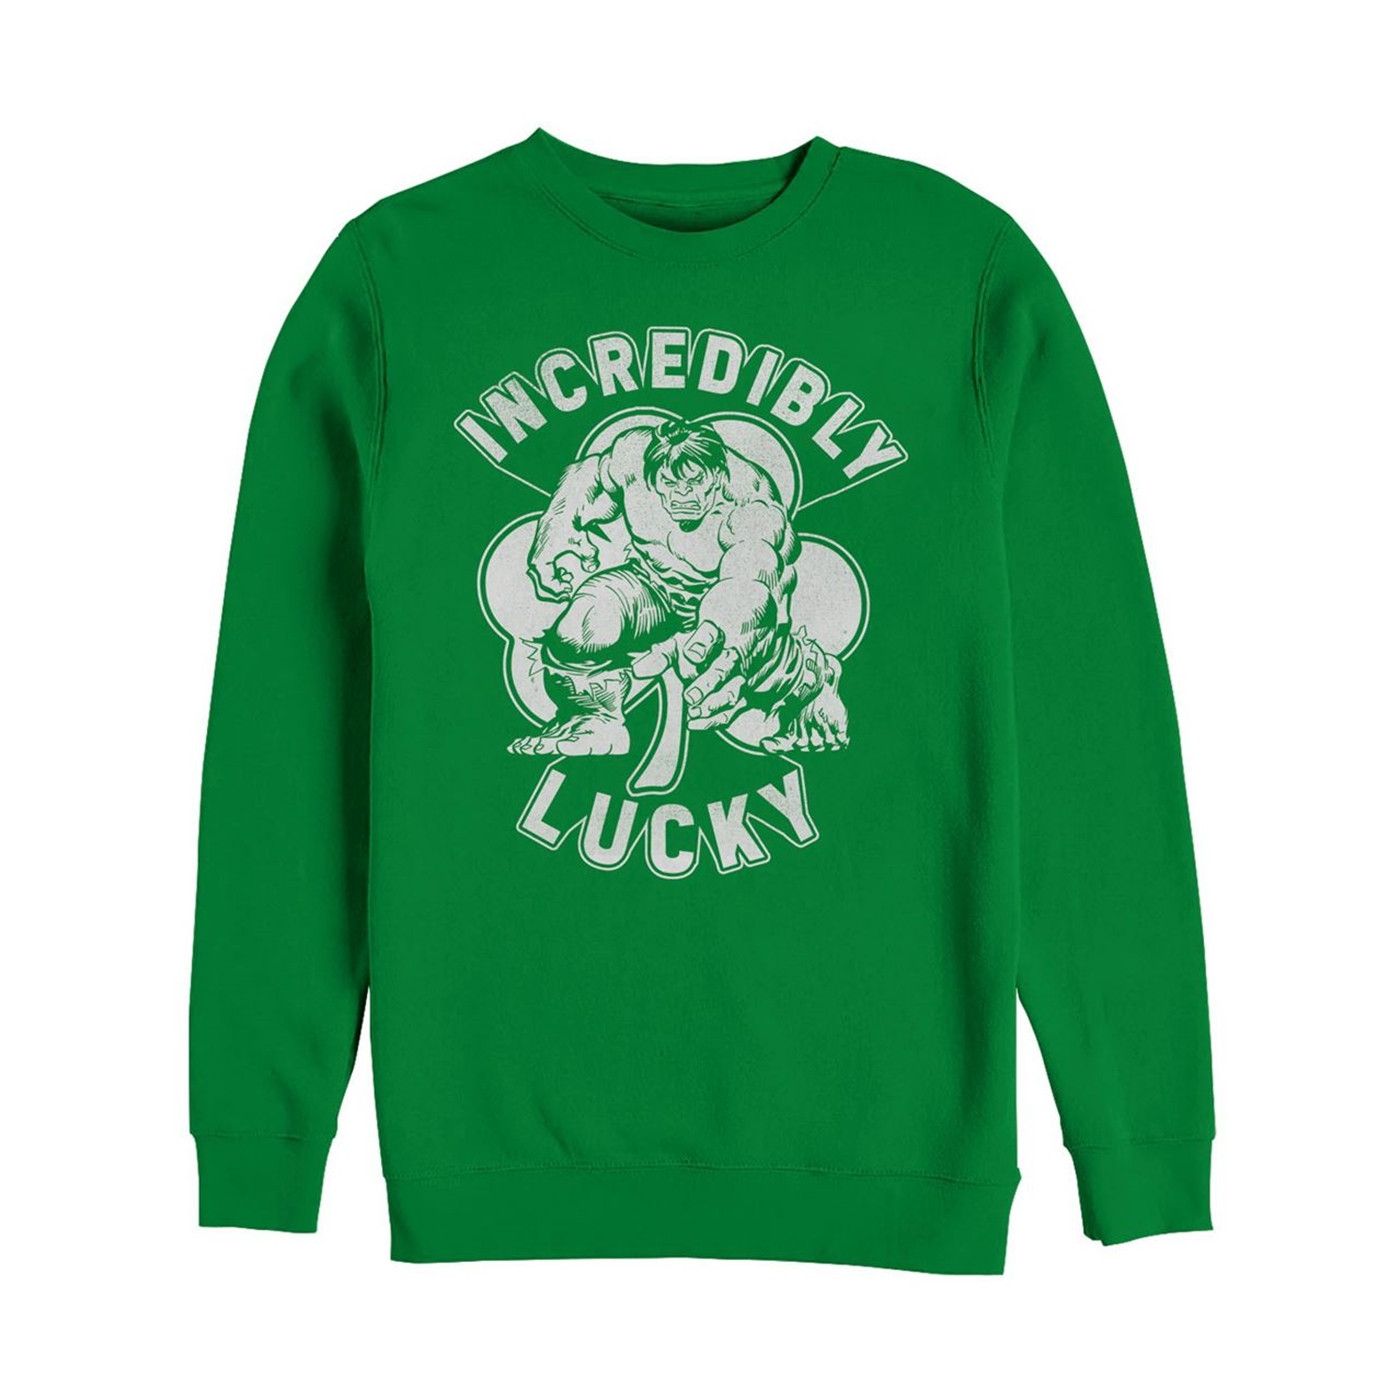 The Hulk Incredibly Lucky St Patrick's Day Crewneck Sweatshirt